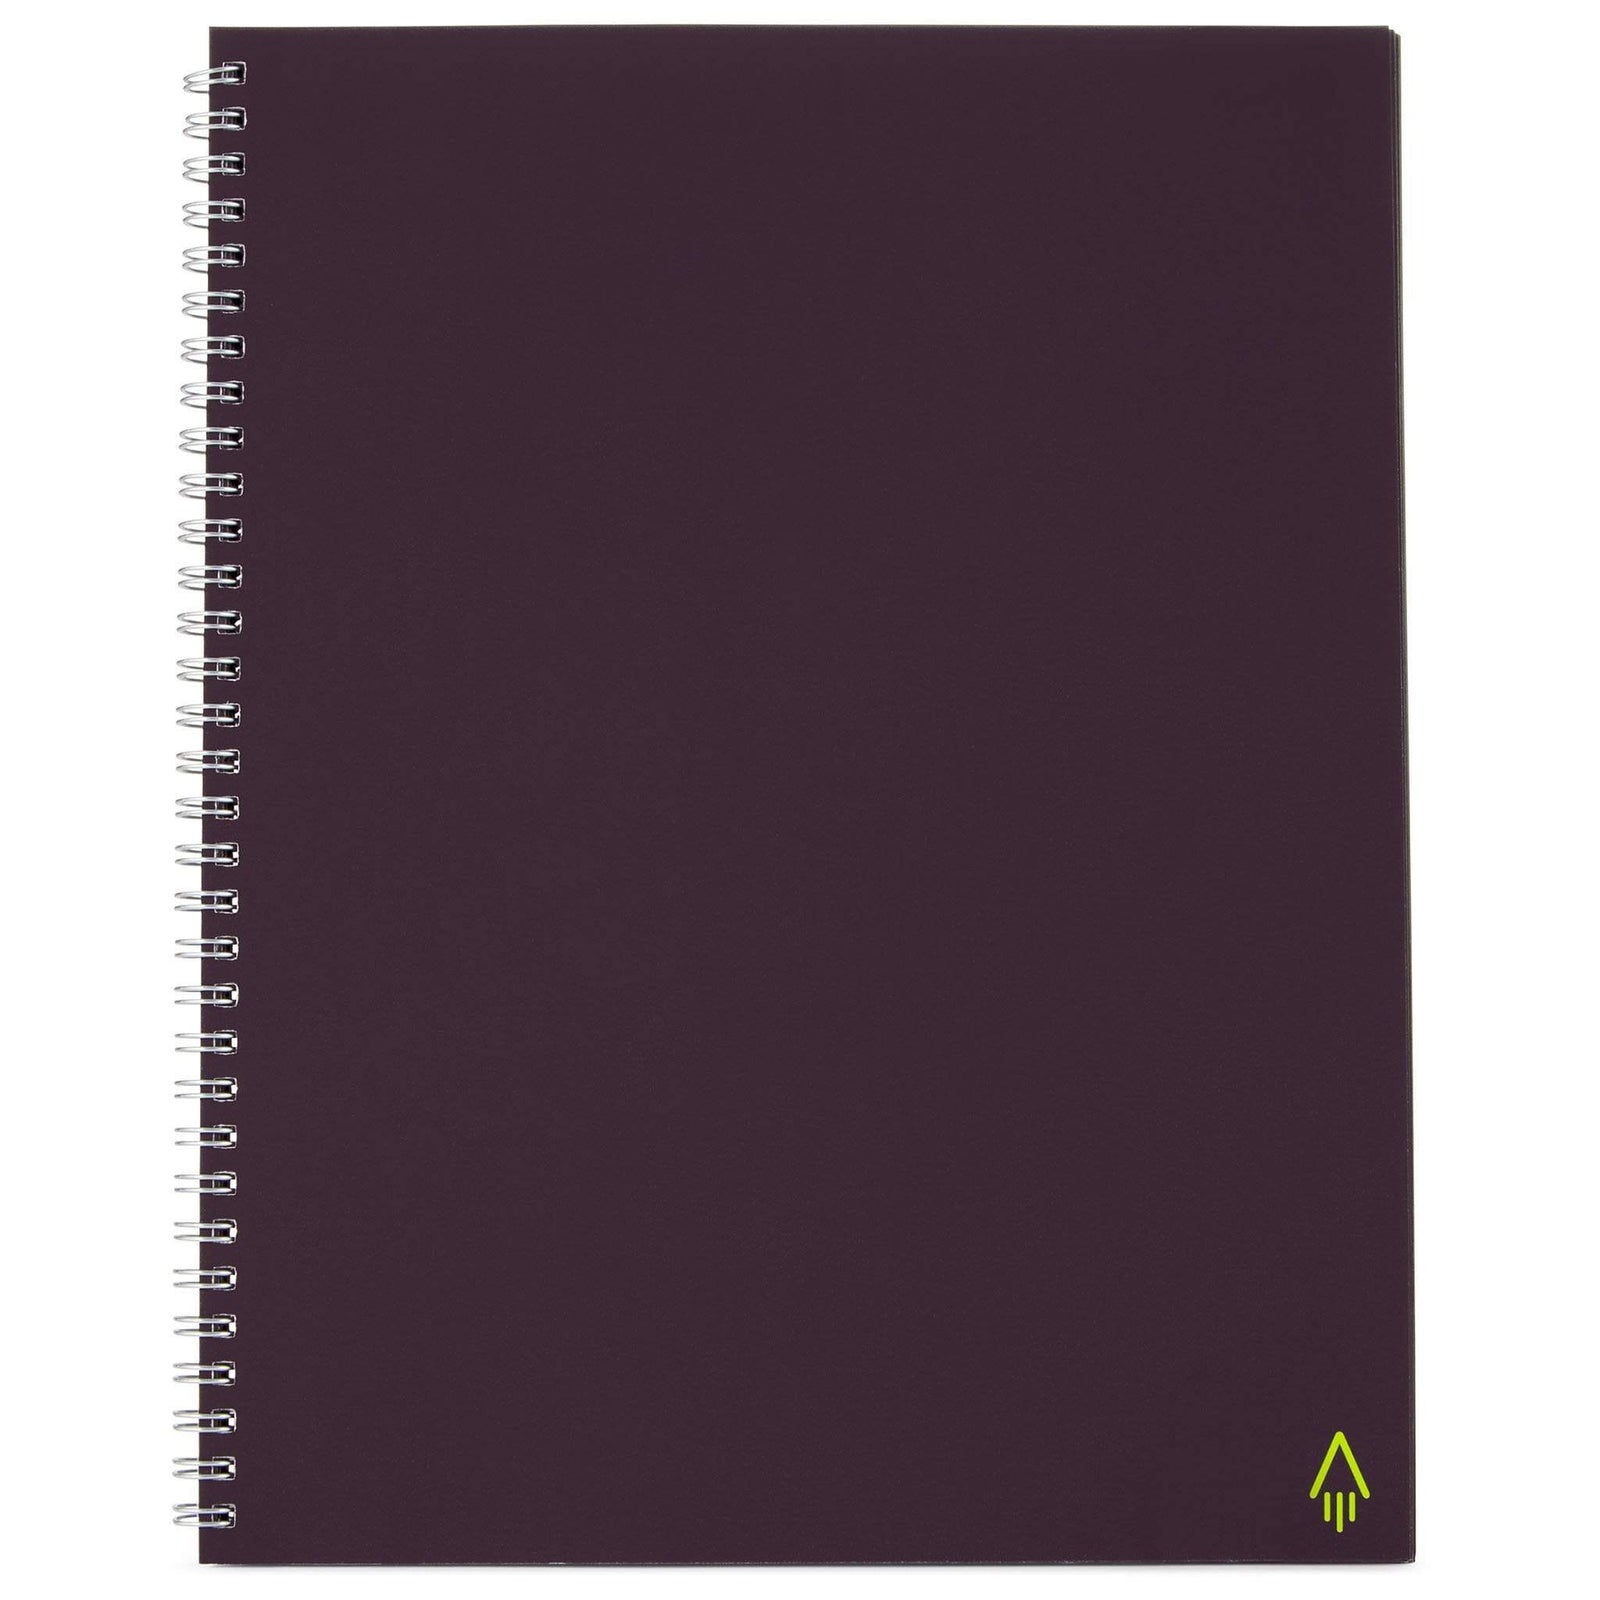 rocket notebook